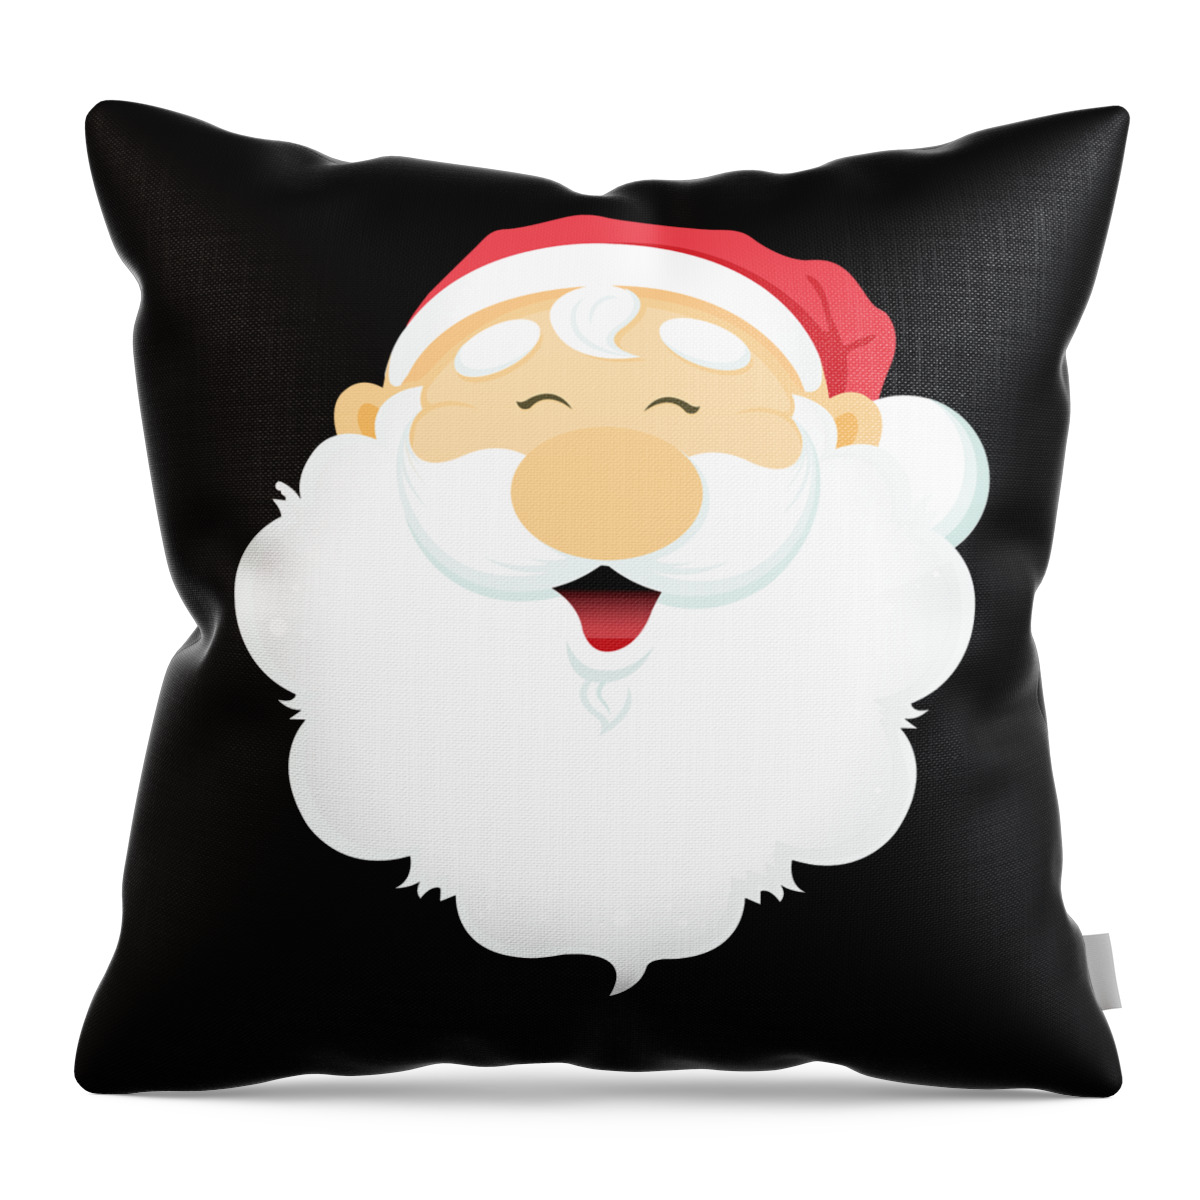 Cool Throw Pillow featuring the digital art Santa Face by Flippin Sweet Gear